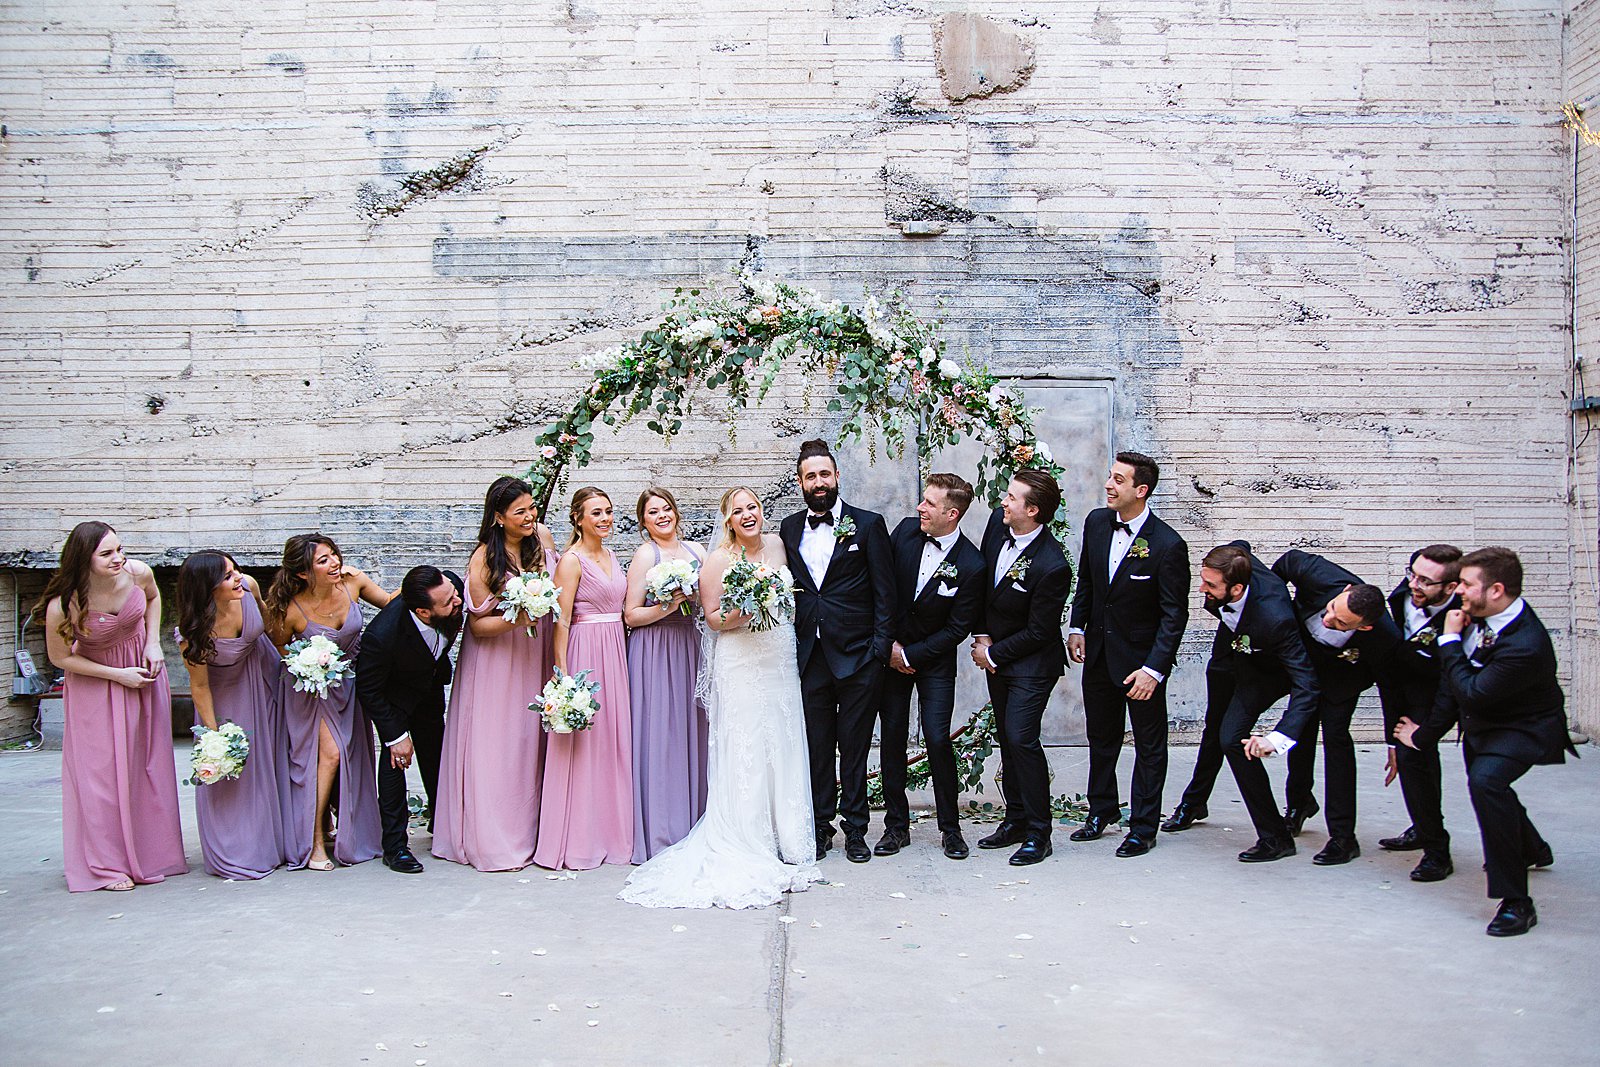 Bridal party having fun together at The Ice House weding by Arizona wedding photographer PMA Photography.